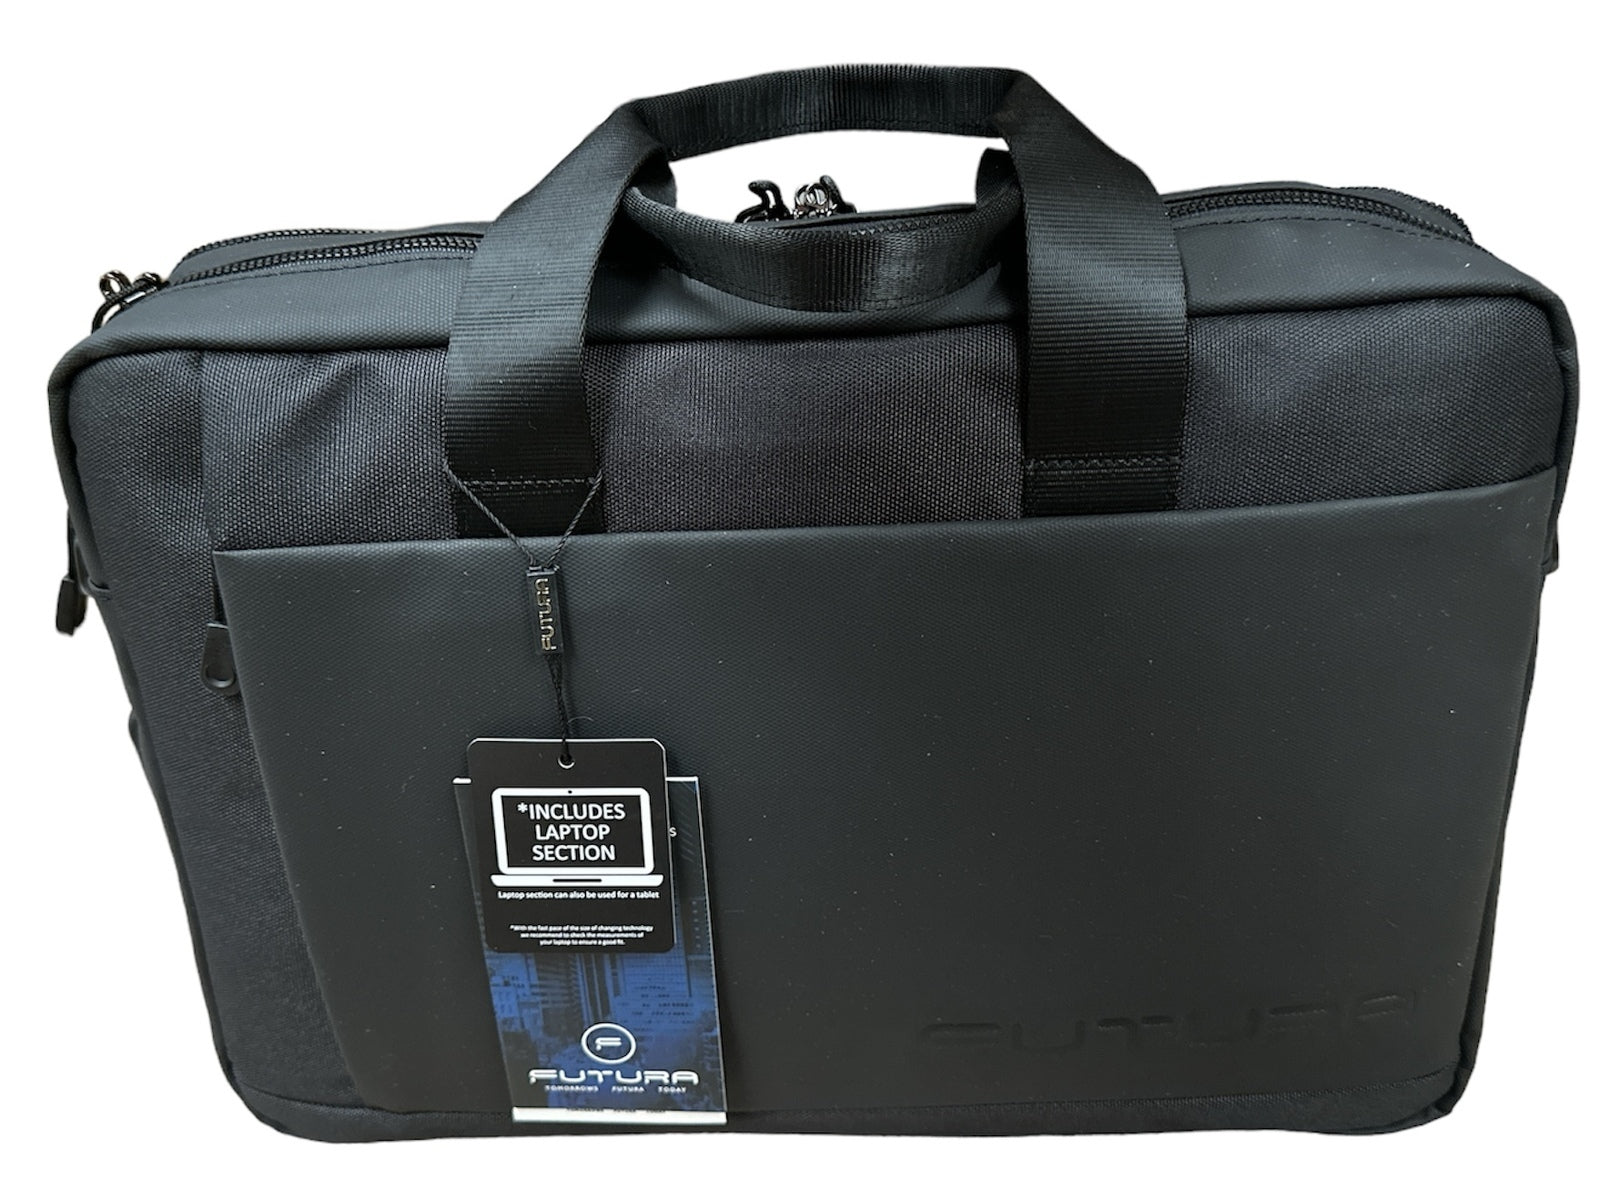 15" Futura Laptop Computer Bag Travel Work Messenger Bag w/USB Port - Black - 0